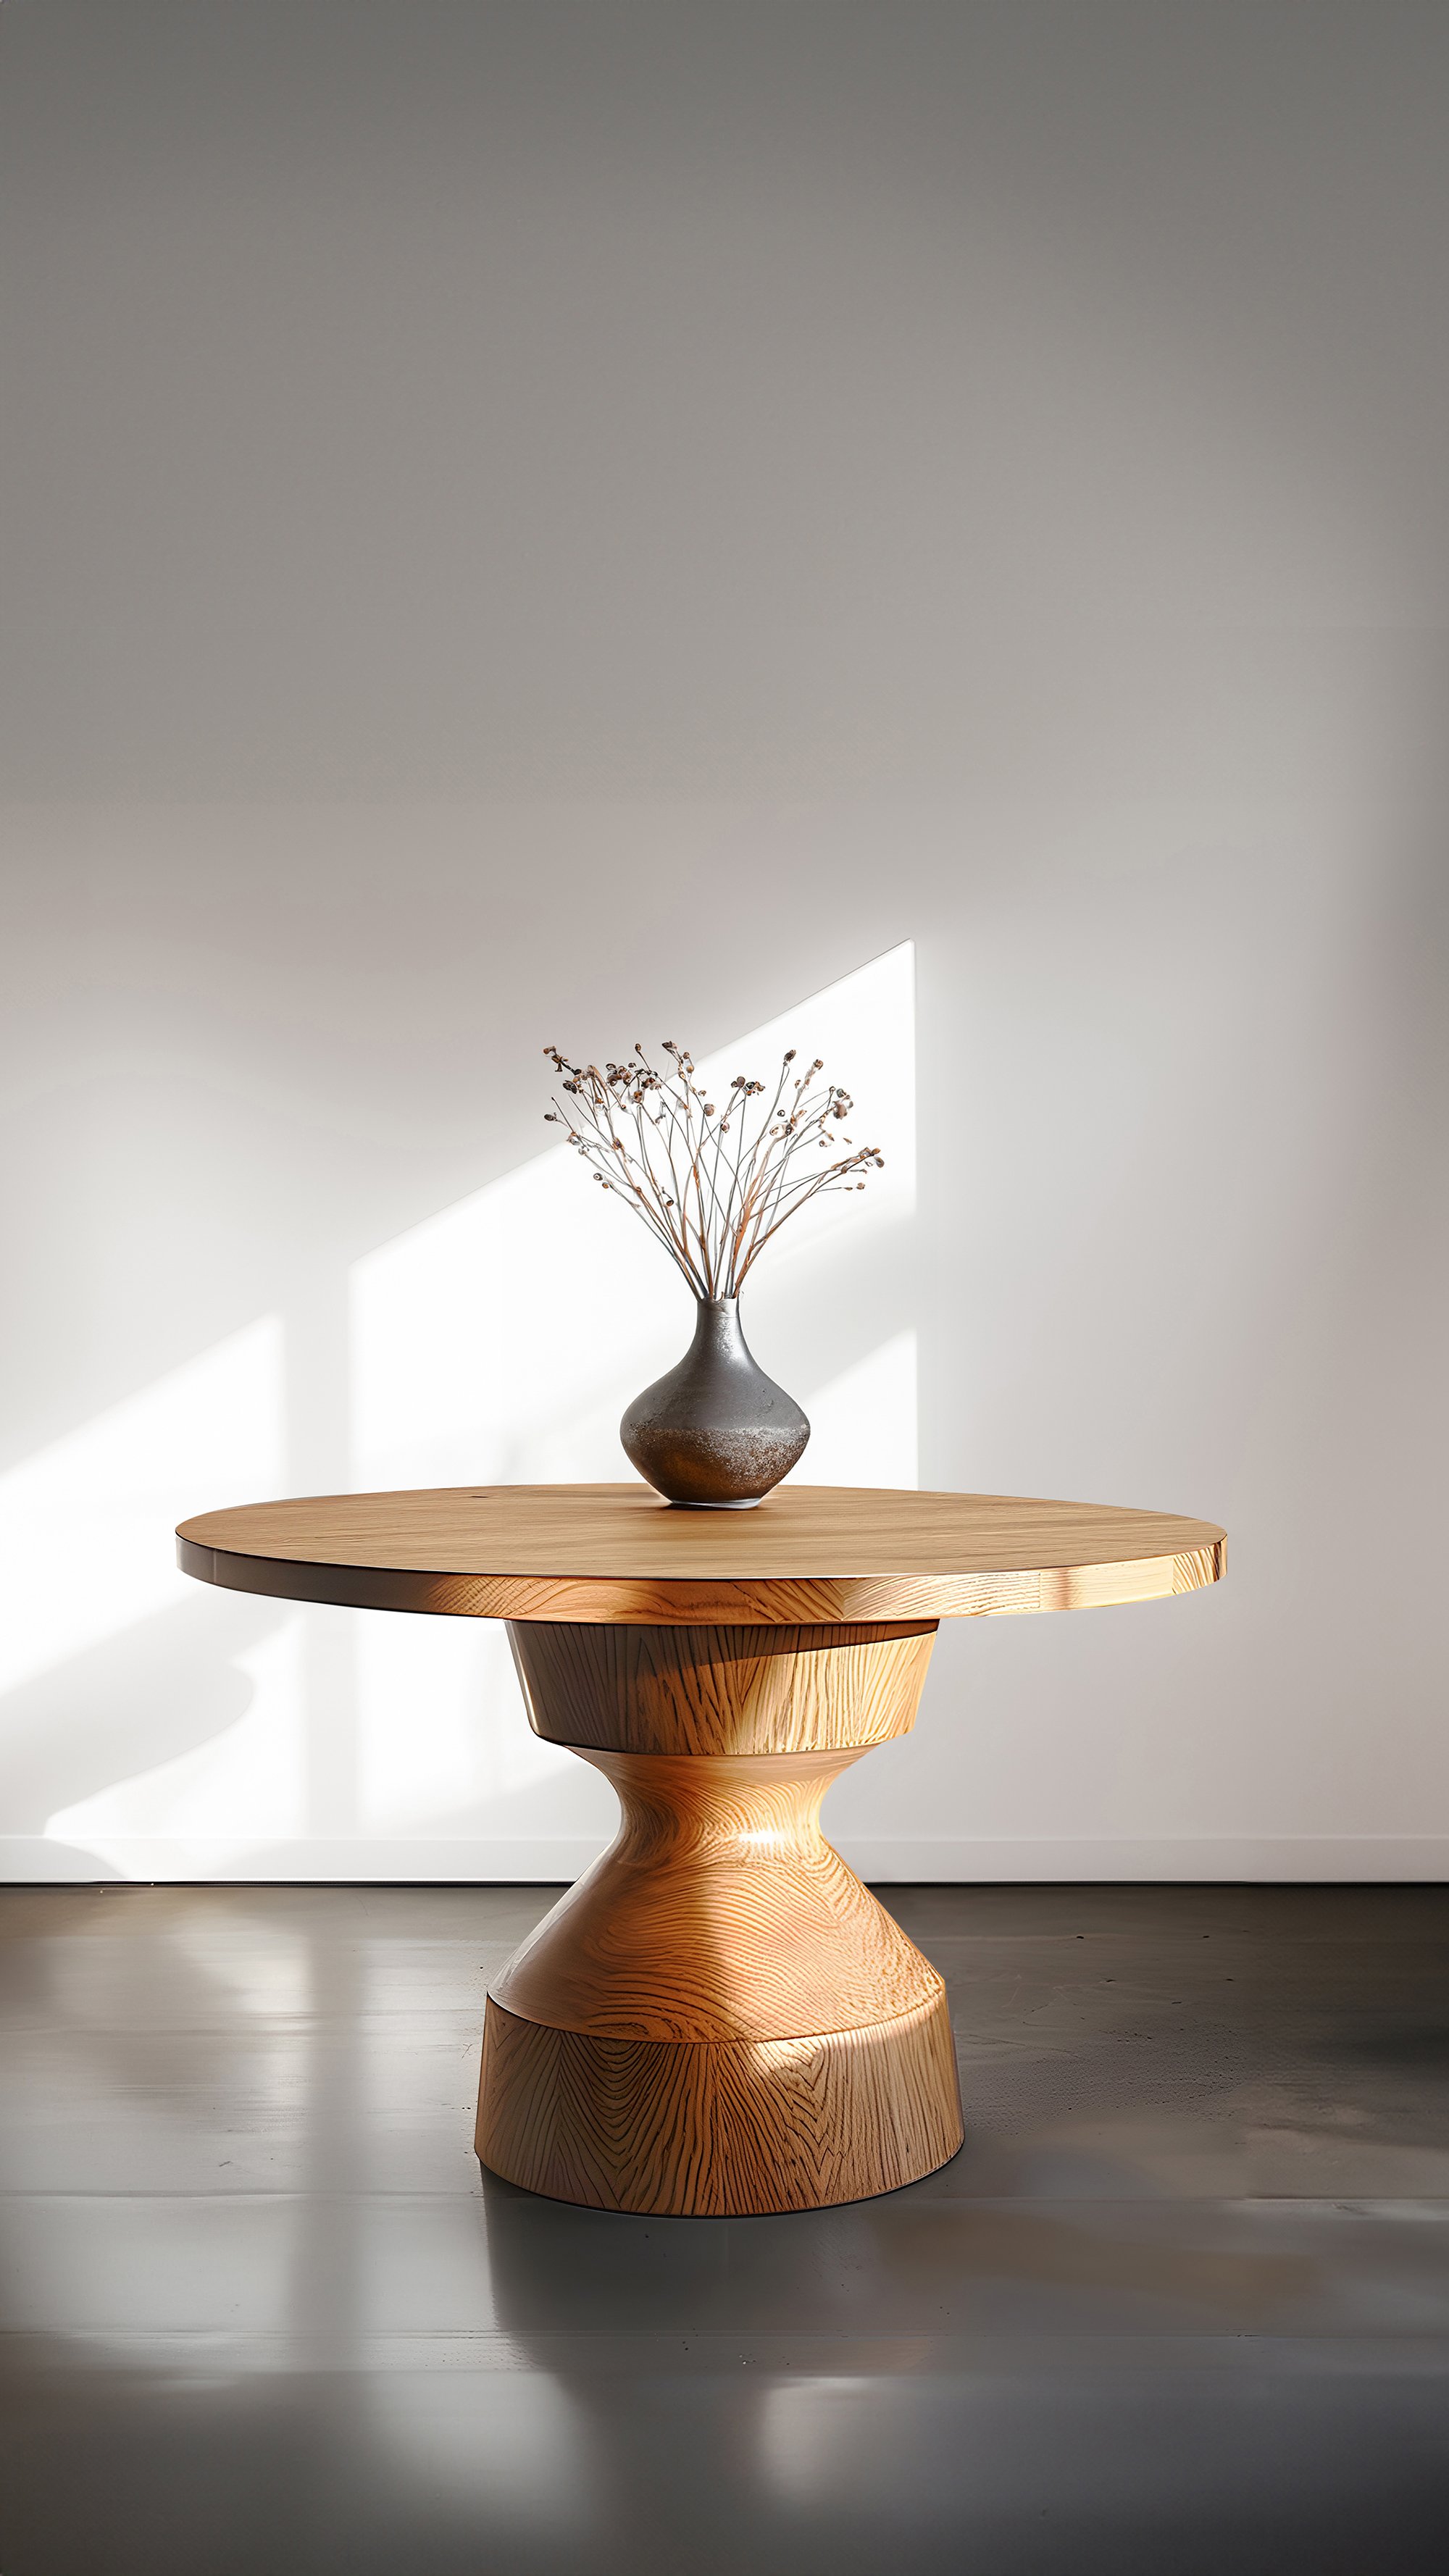 Socle by Joel Escalona, Conference Tables, Design Meets Function No19 - 5.jpg